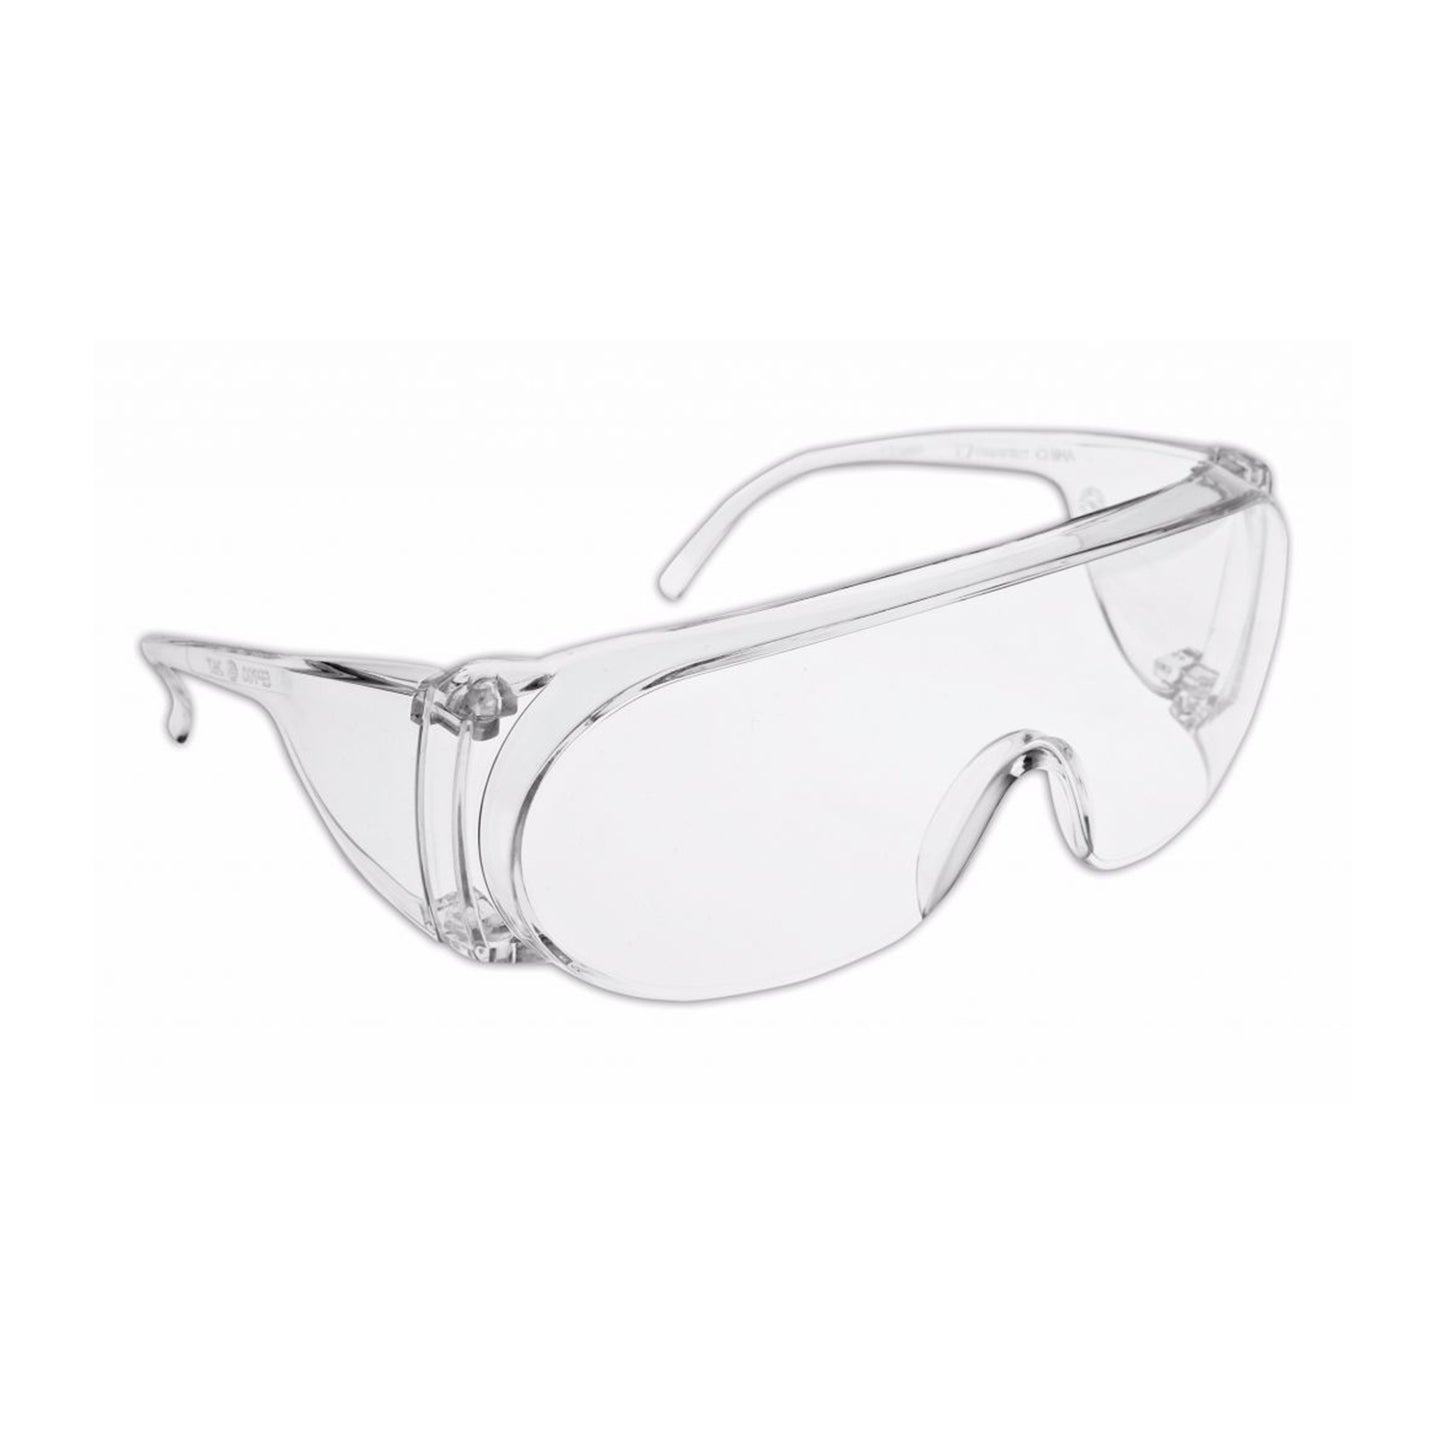 Dynamic Overzetbril Clear - van Dynamic - Nu voor maar €3.95 bij Workwear 2 Day